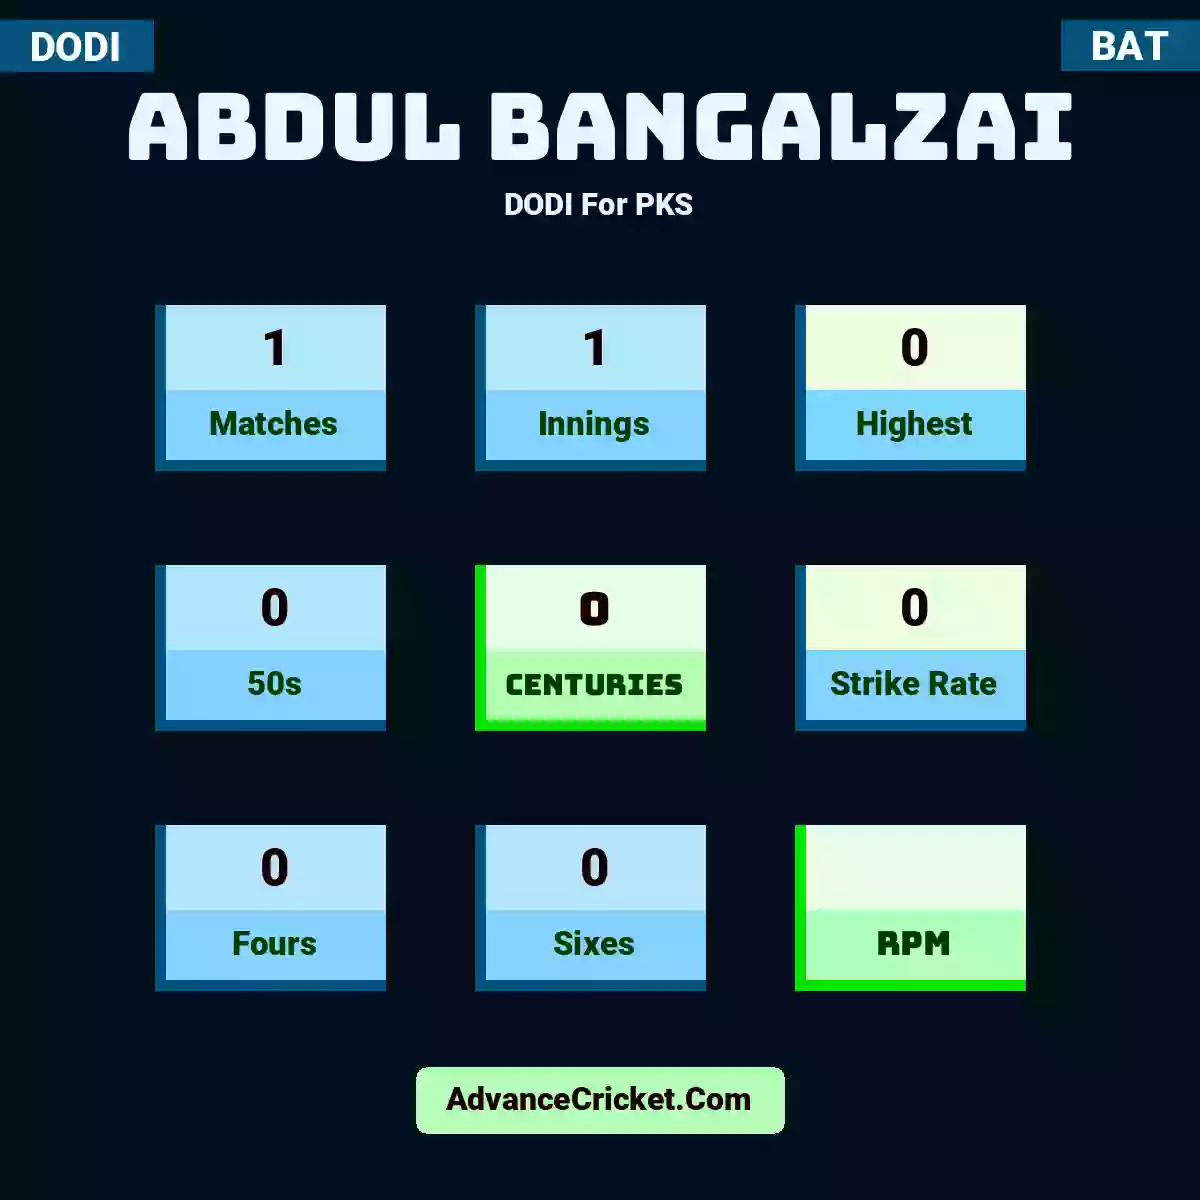 Abdul Bangalzai DODI  For PKS, Abdul Bangalzai played 1 matches, scored 0 runs as highest, 0 half-centuries, and 0 centuries, with a strike rate of 0. A.Bangalzai hit 0 fours and 0 sixes.